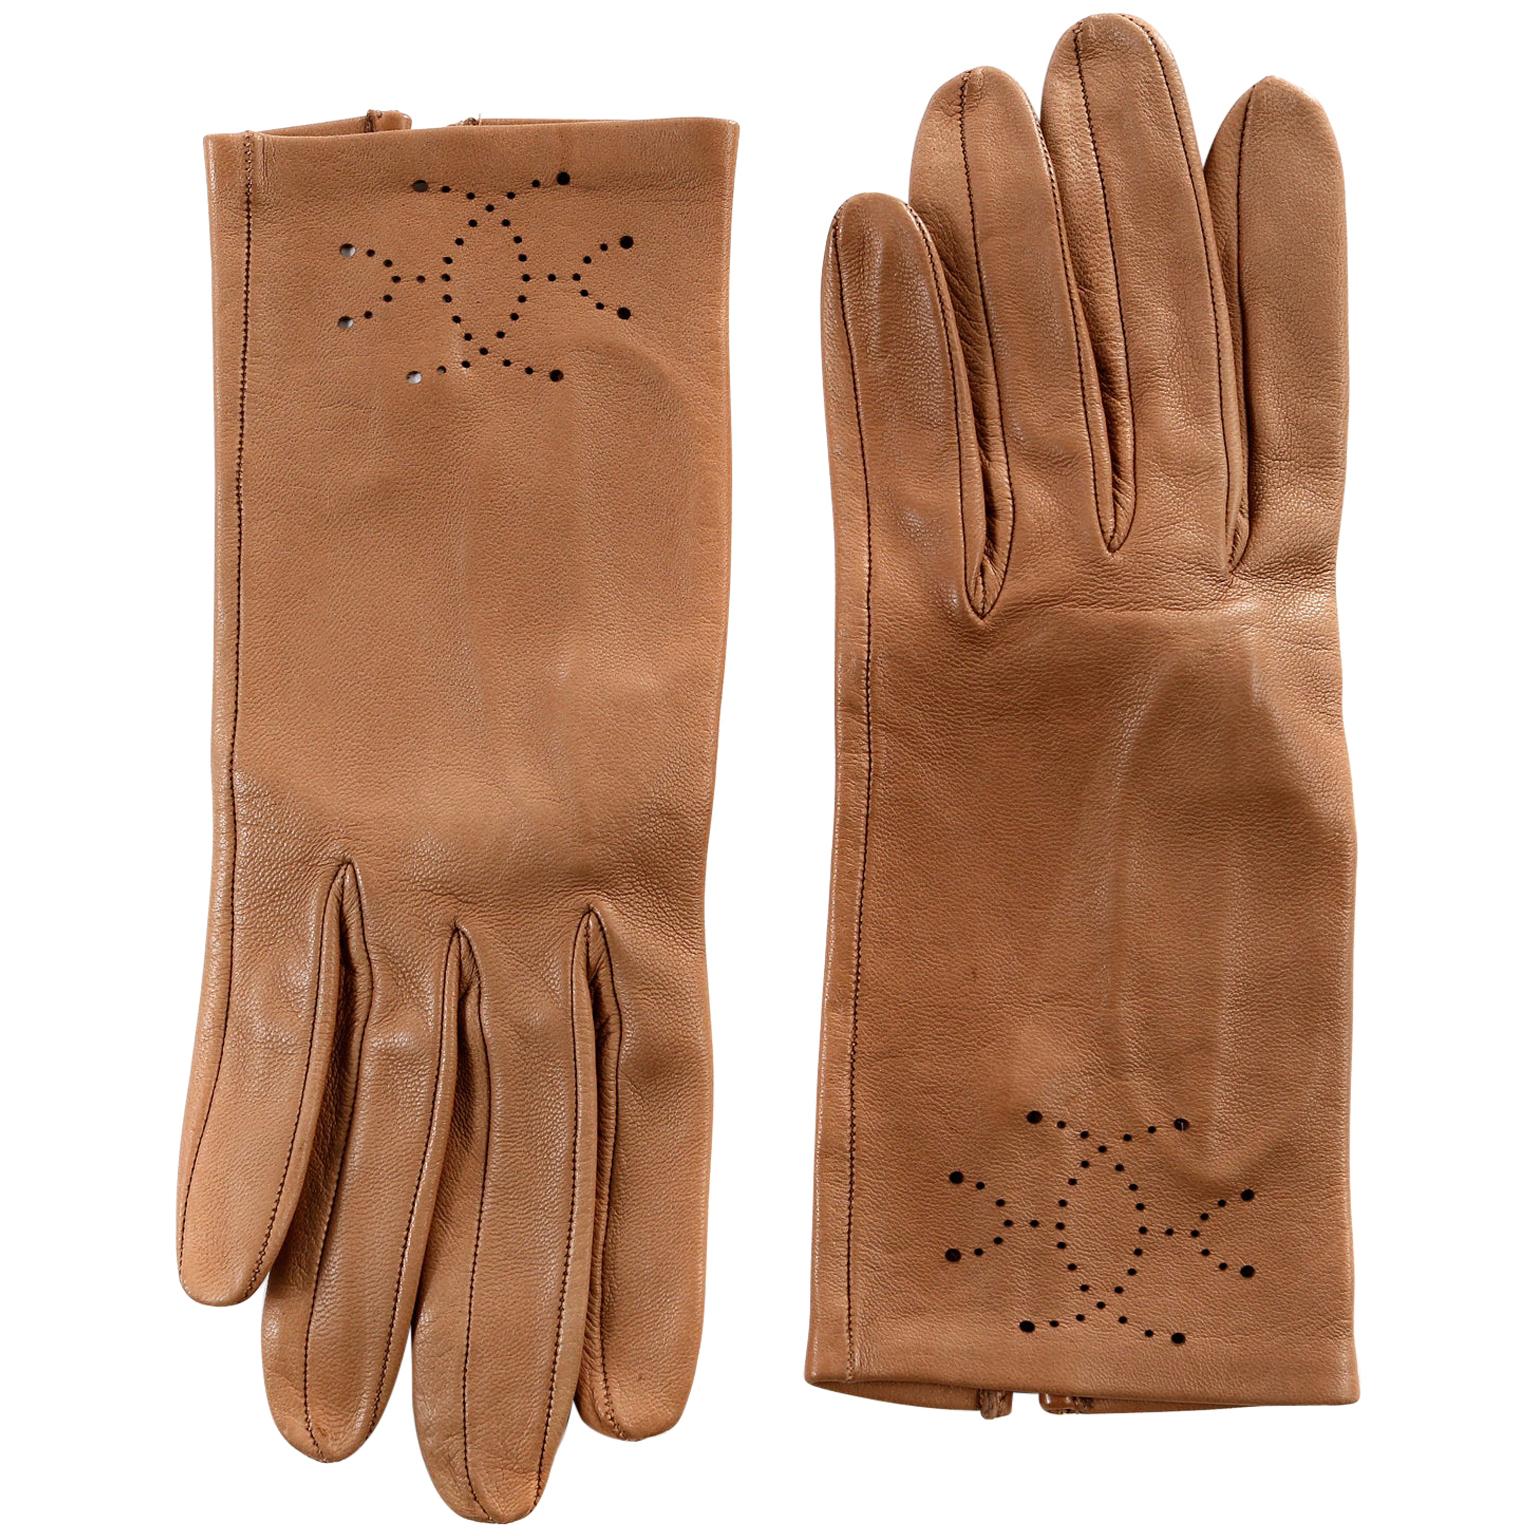 Hermès Gold Leather Eclipse Gloves size 6.5